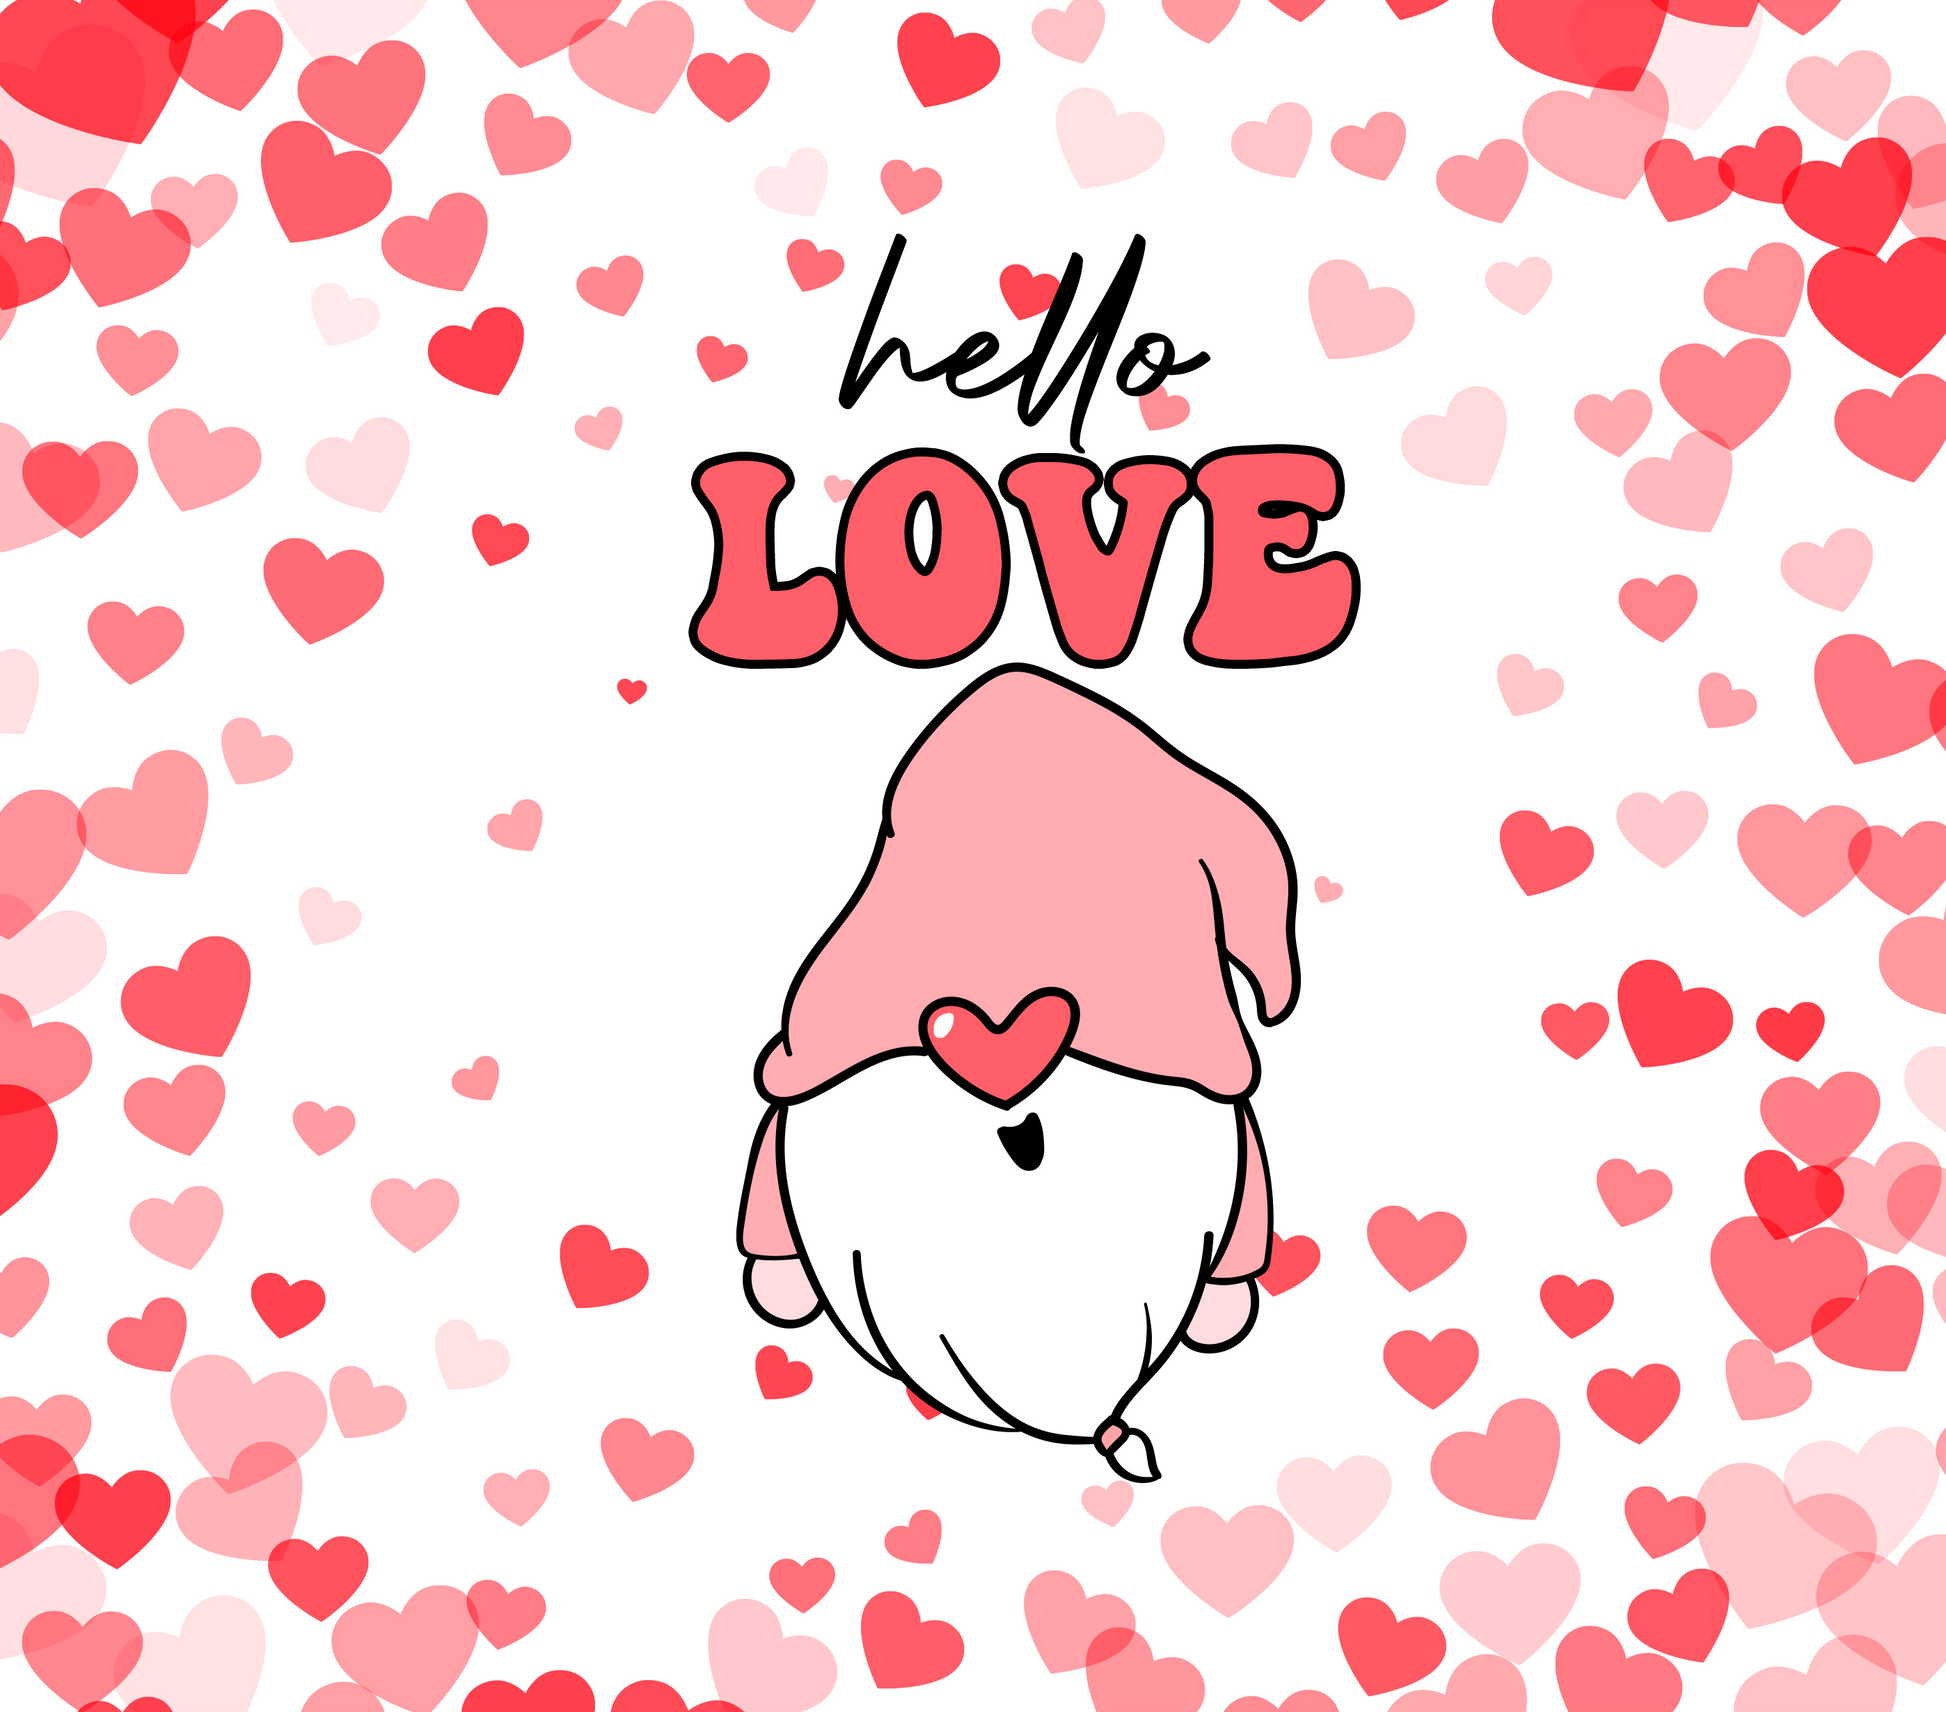 Valentine's Love – Hello Holidays